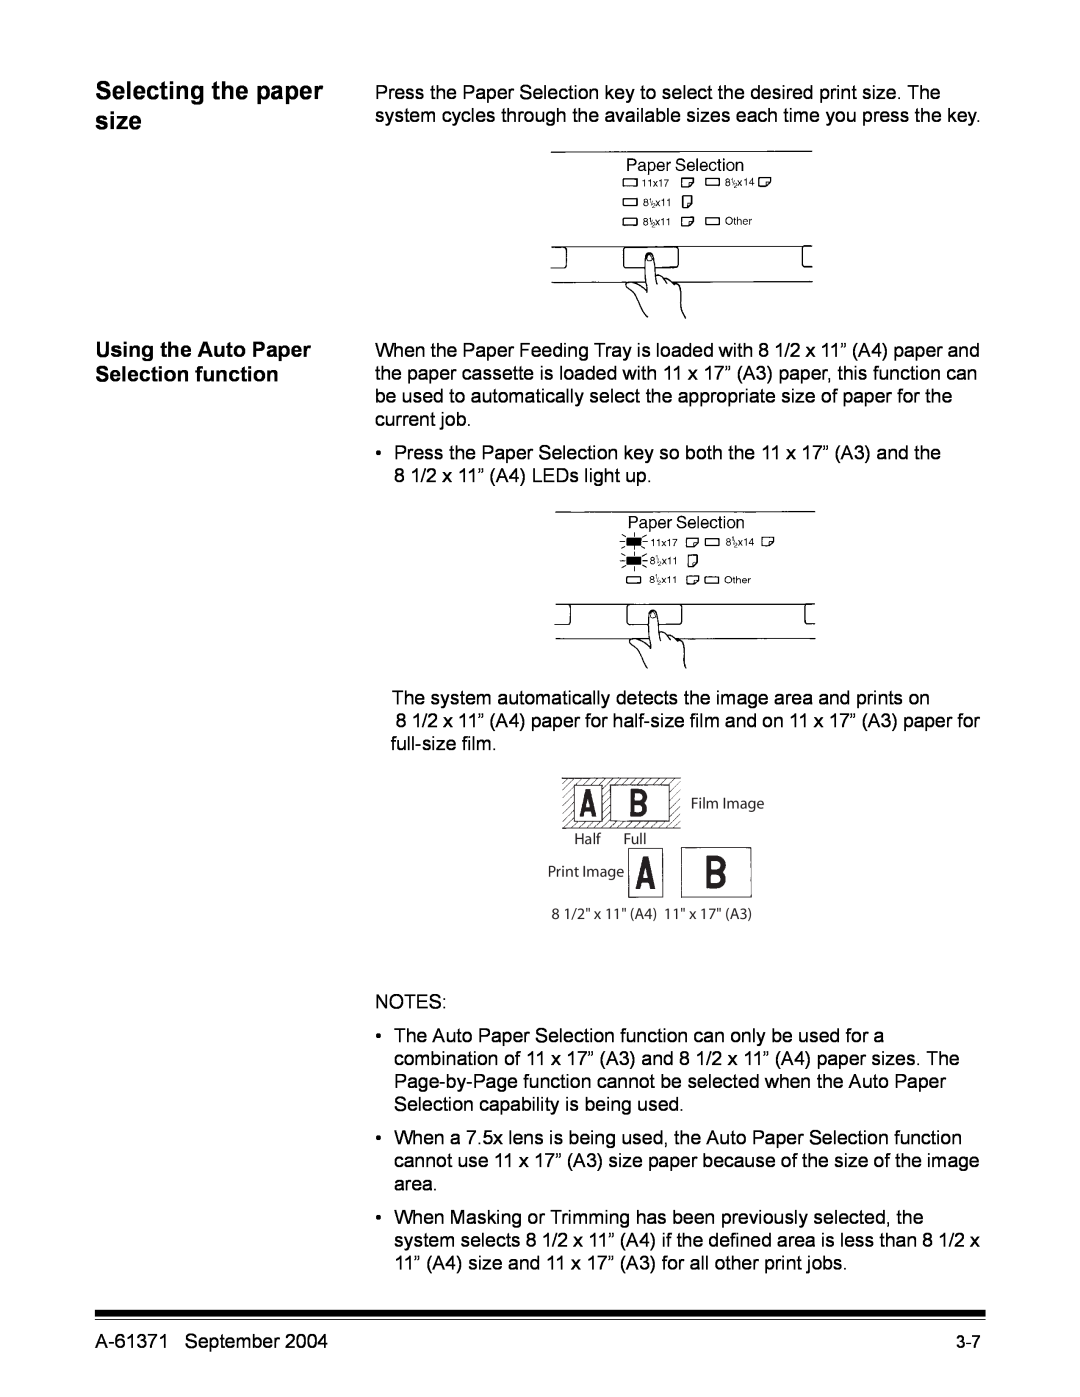 Kodak 3000DSV-E manual Selecting the paper size, Using the Auto Paper Selection function 